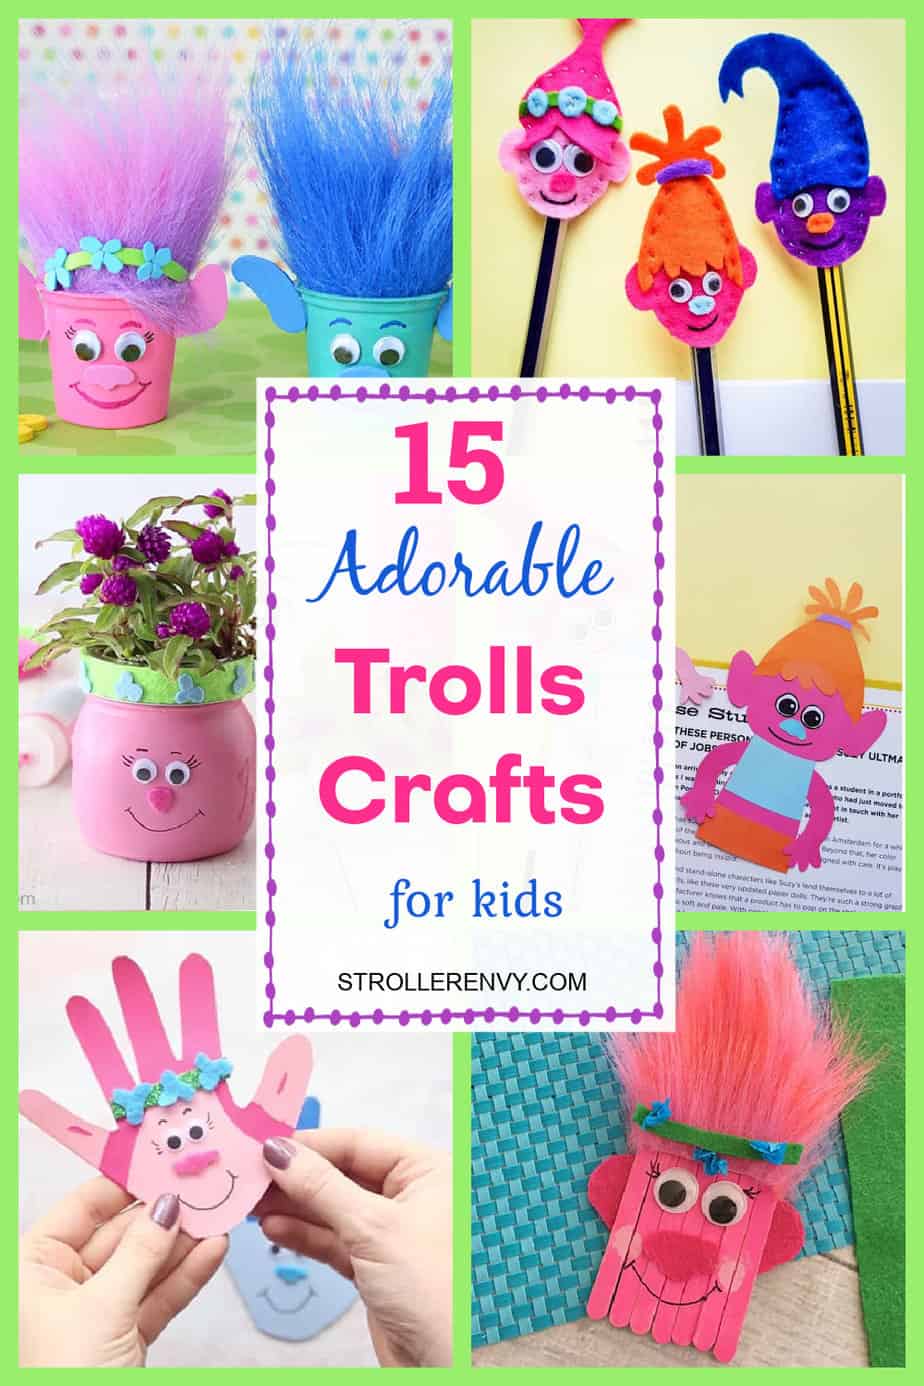 Trolls Crafts for Kids